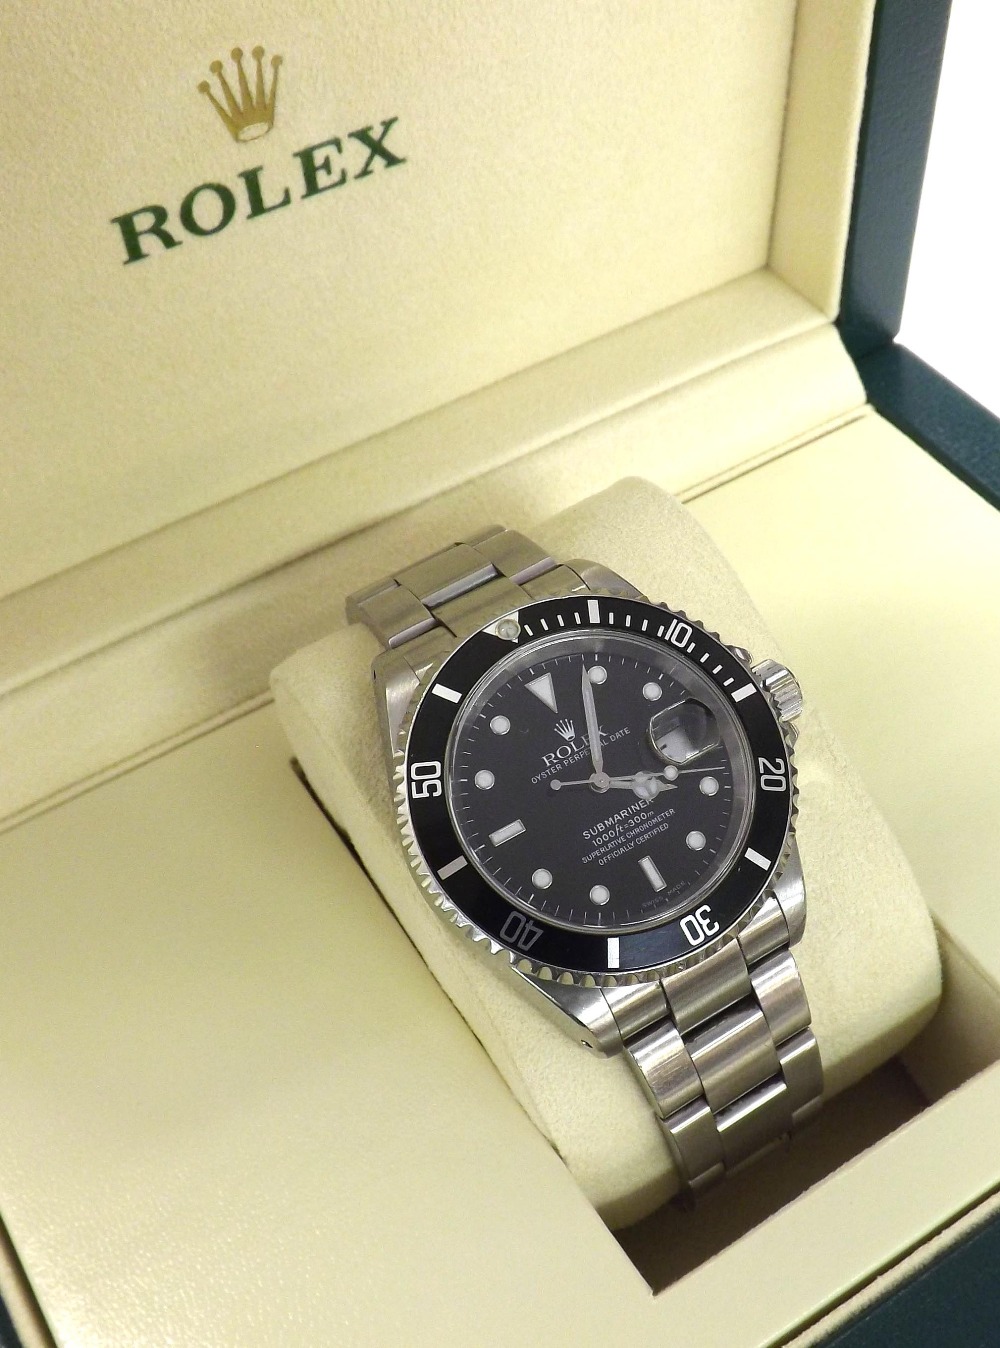 Rolex Oyster Perpetual Date Submariner stainless steel gentleman's bracelet watch, ref. 16610, - Image 2 of 8